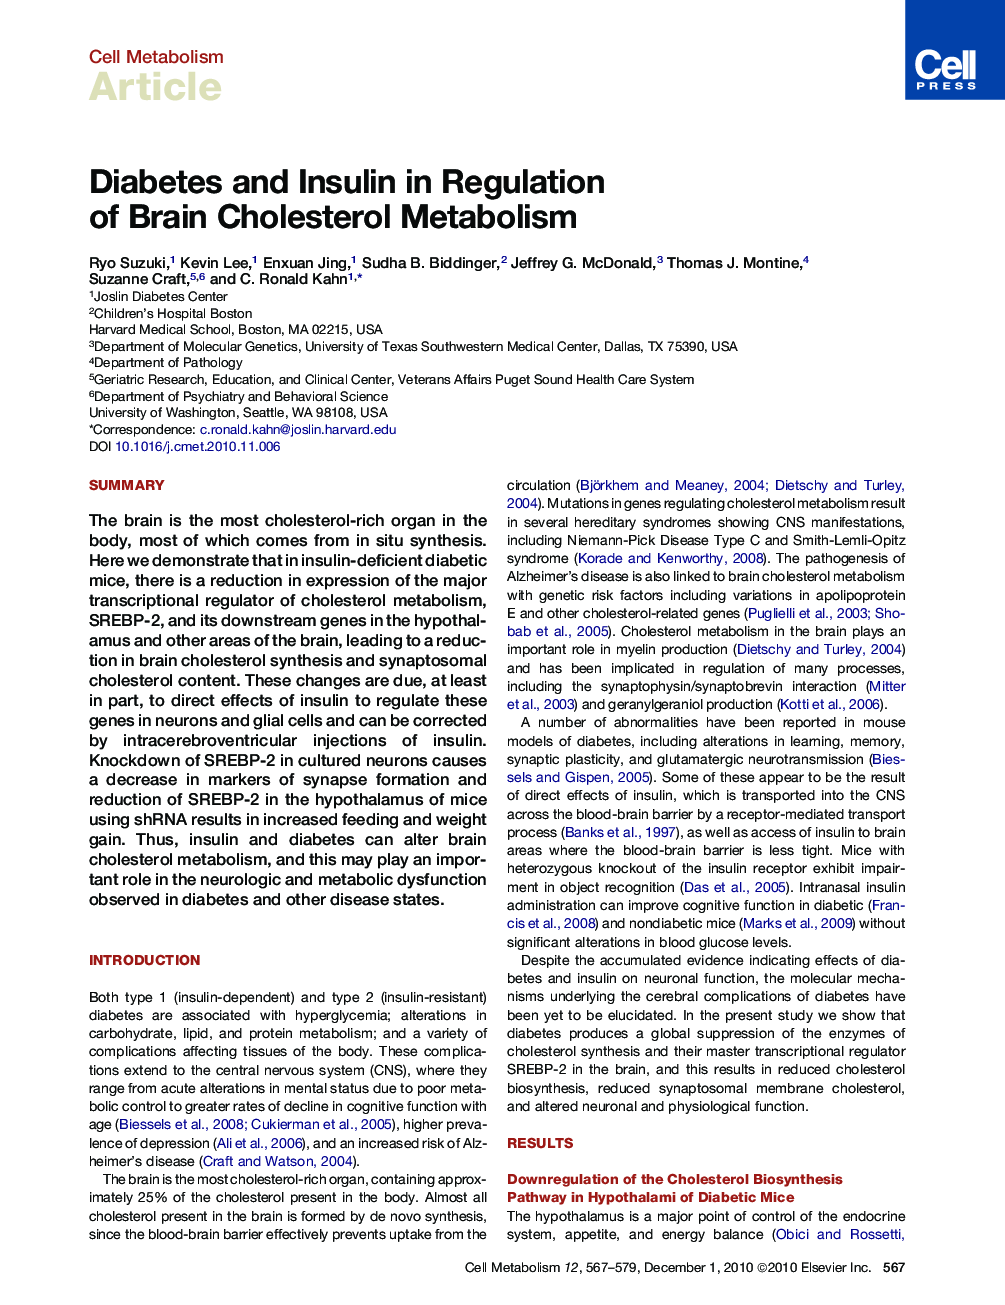 Diabetes and Insulin in Regulation of Brain Cholesterol Metabolism